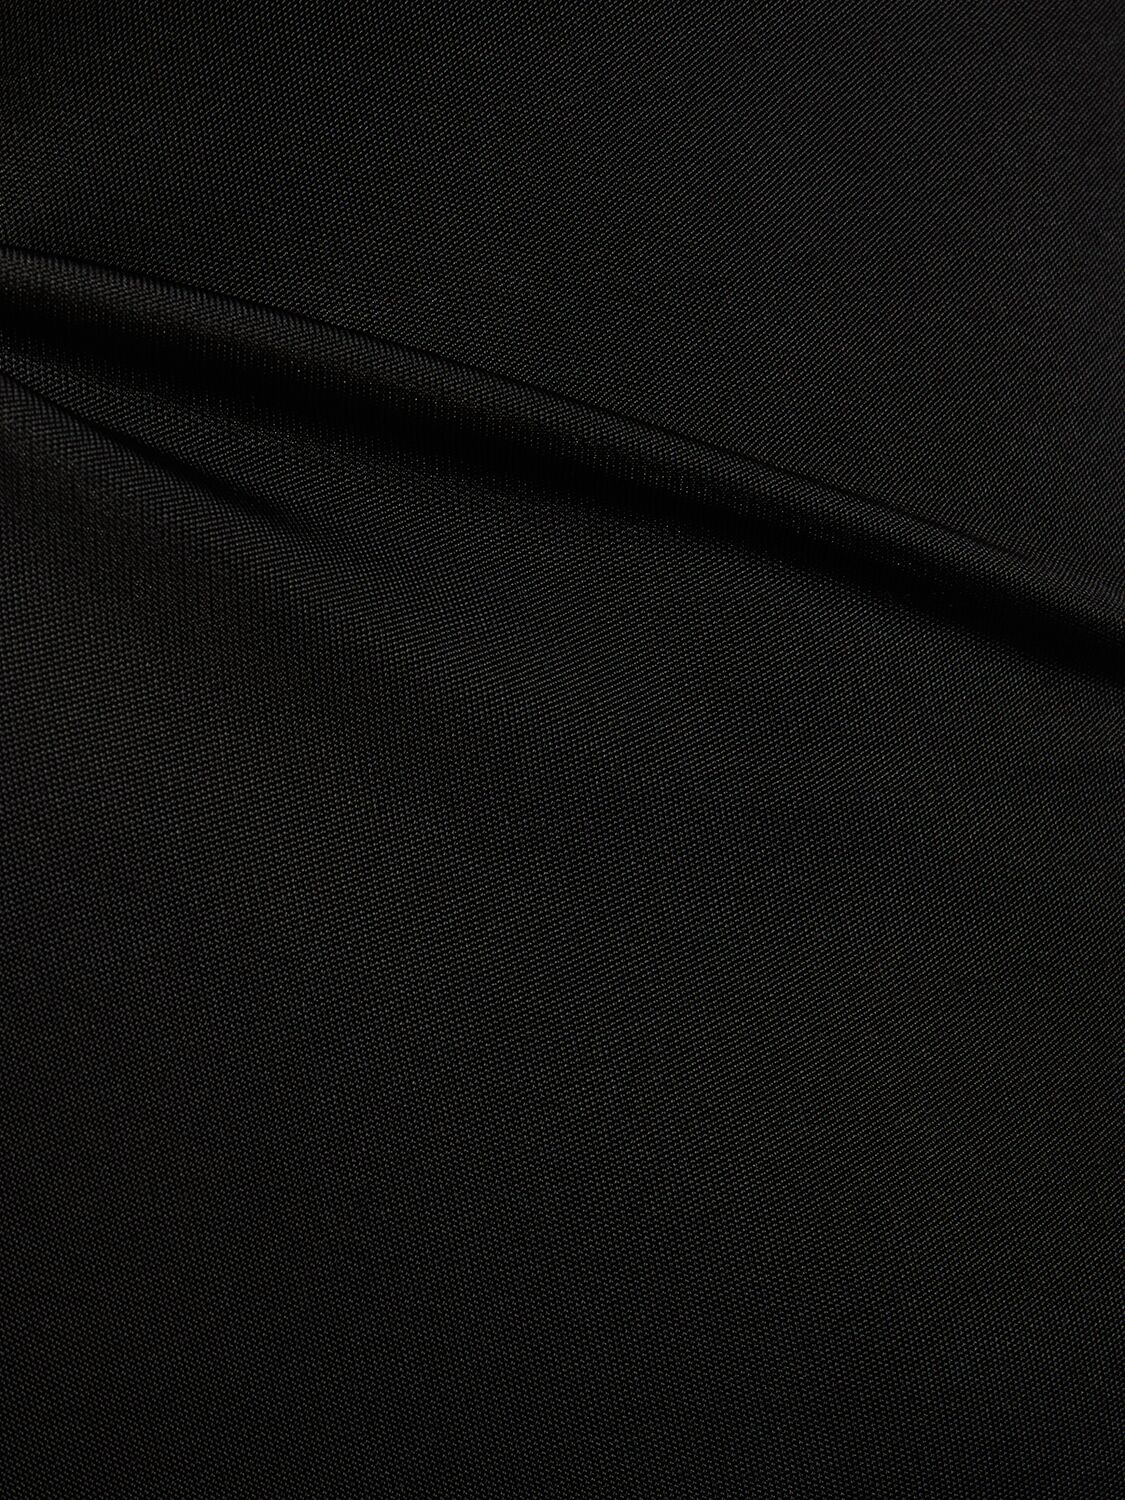 Shop The Andamane Priscilla Stretch Viscose Flare Jumpsuit In Black